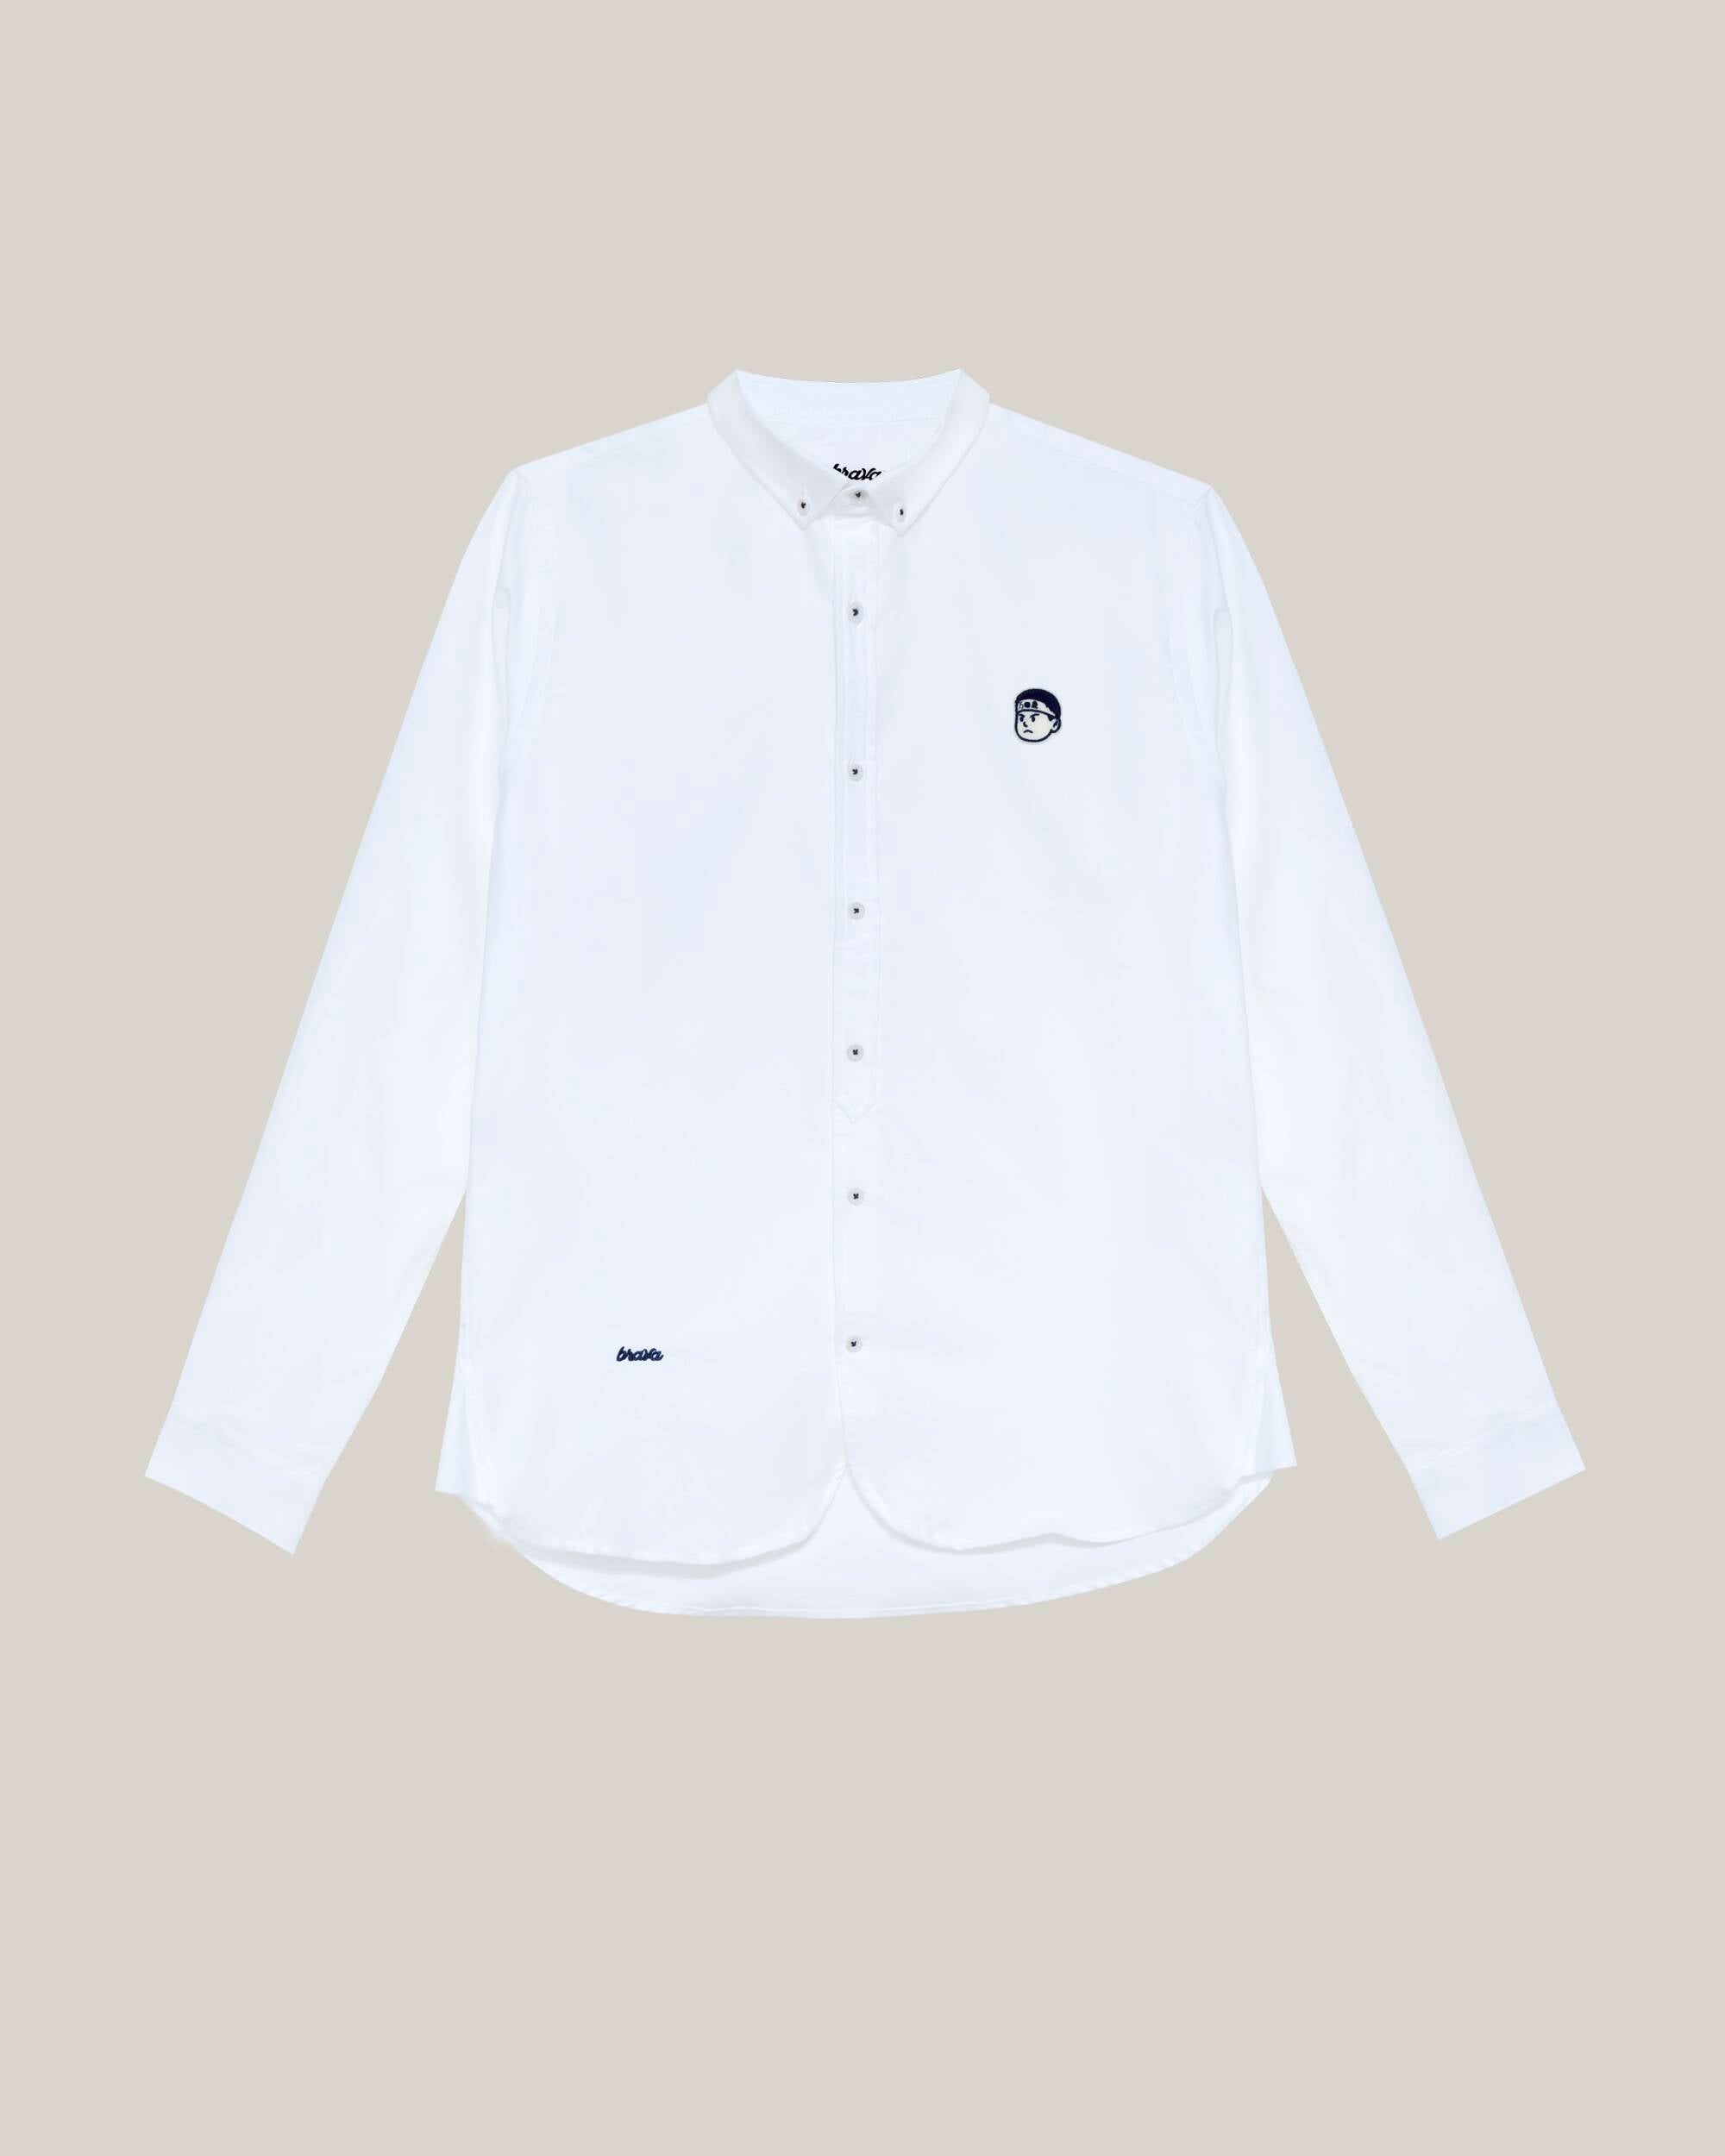 Weisses, lamgärmliges Hemd Akito aus 100% Bio-Baumwolle von Brava Fabrics